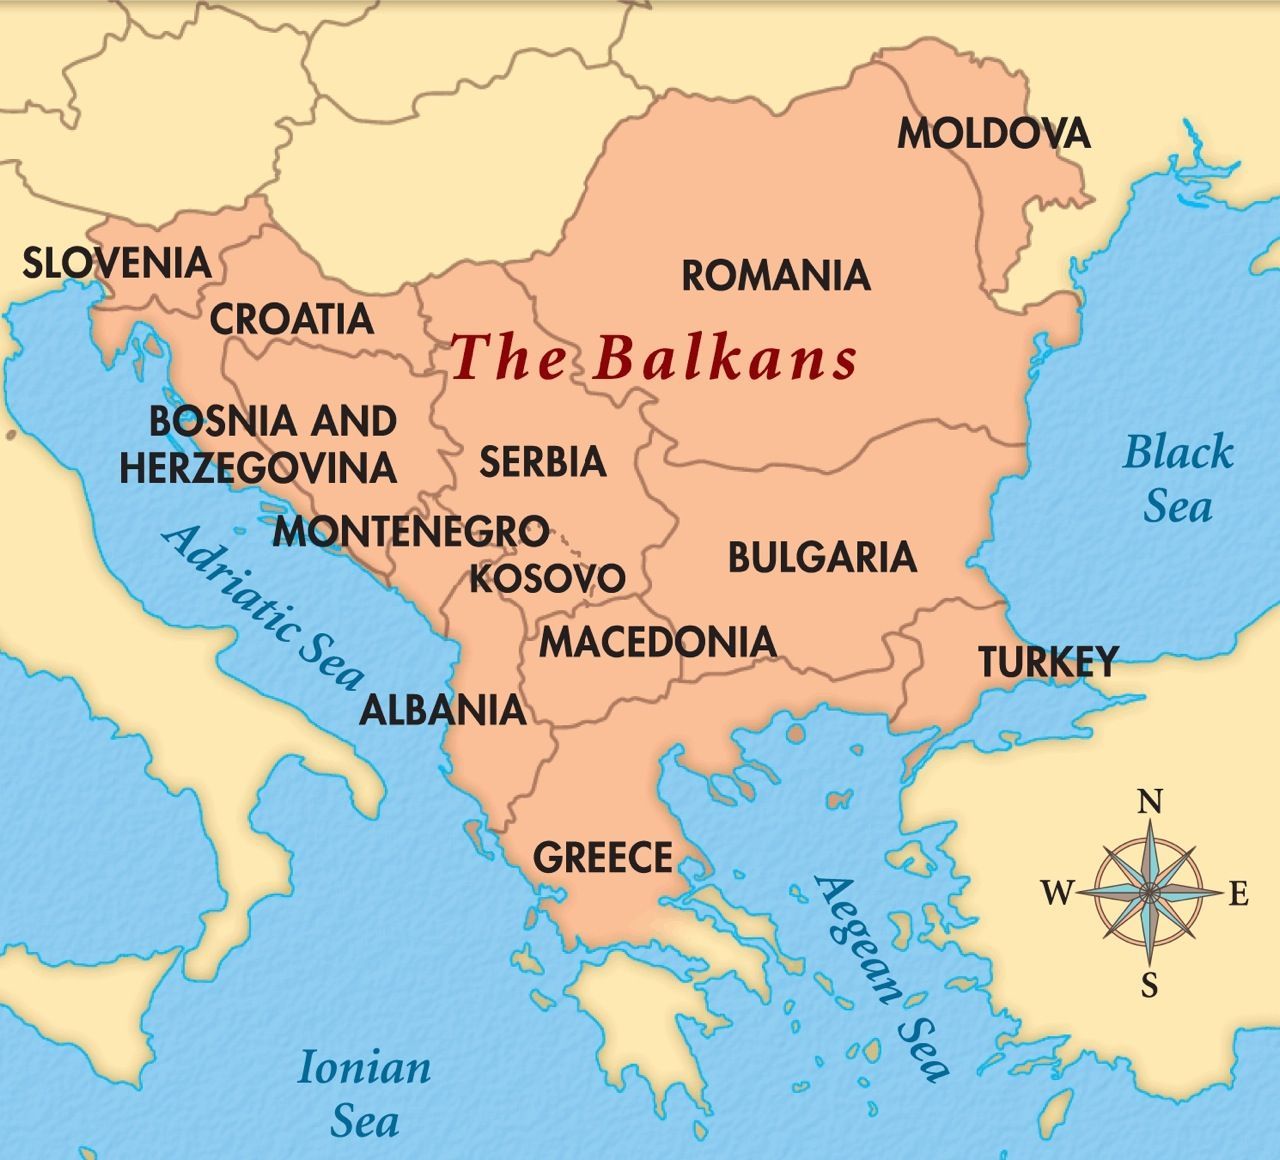 The Balkans ideas. serbia, montenegro, macedonia